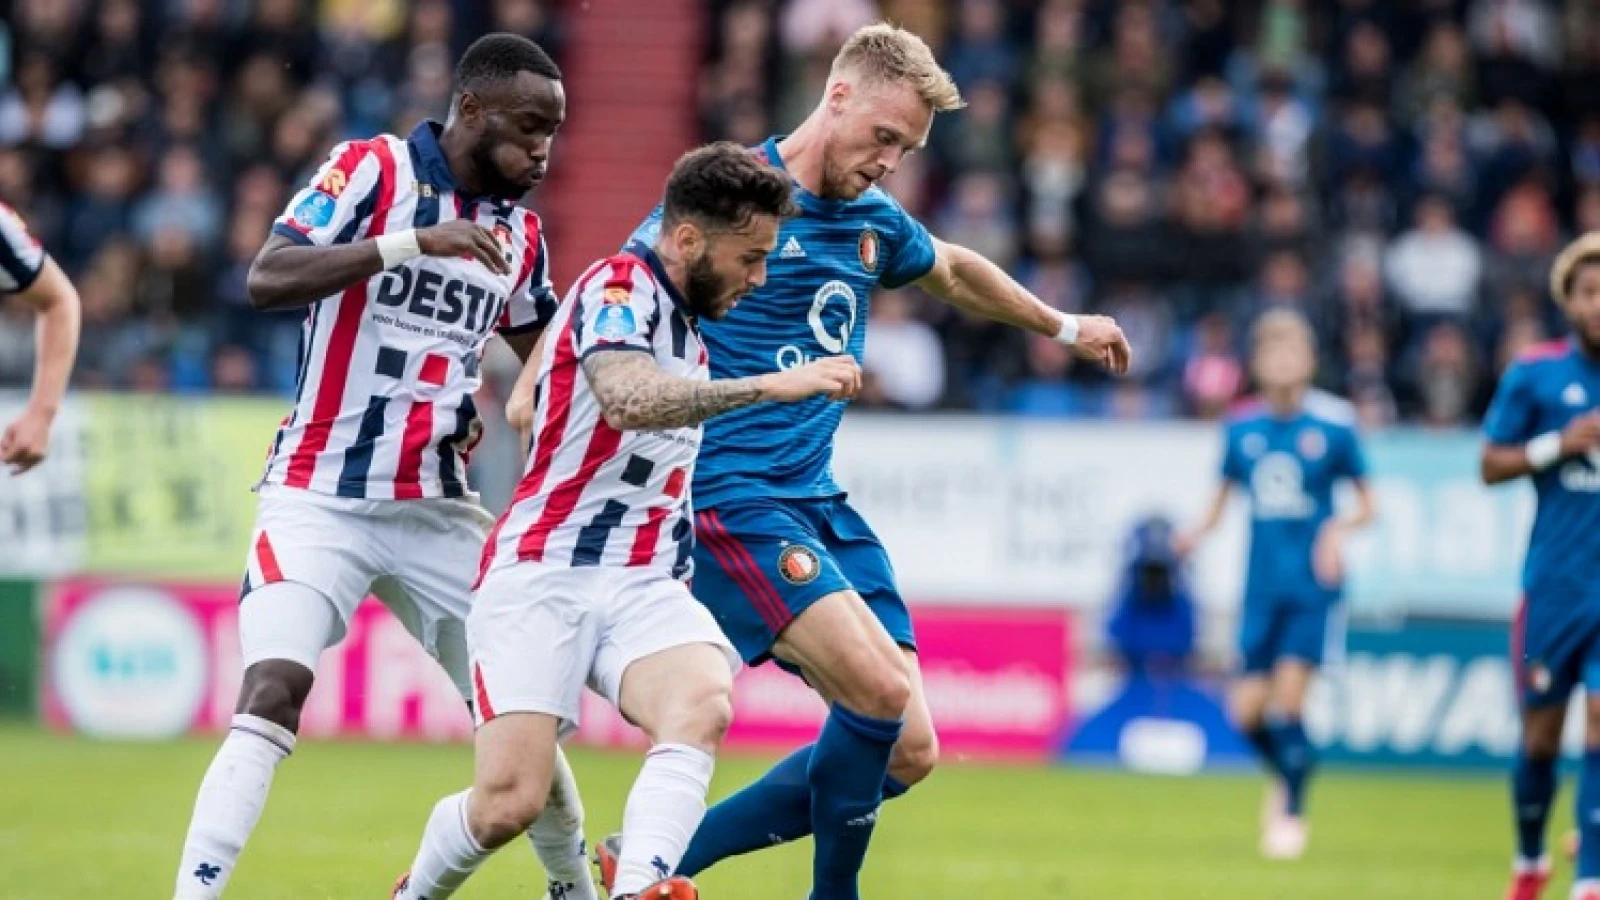 LIVE | Willem II - Feyenoord 1-1 | Einde wedstrijd